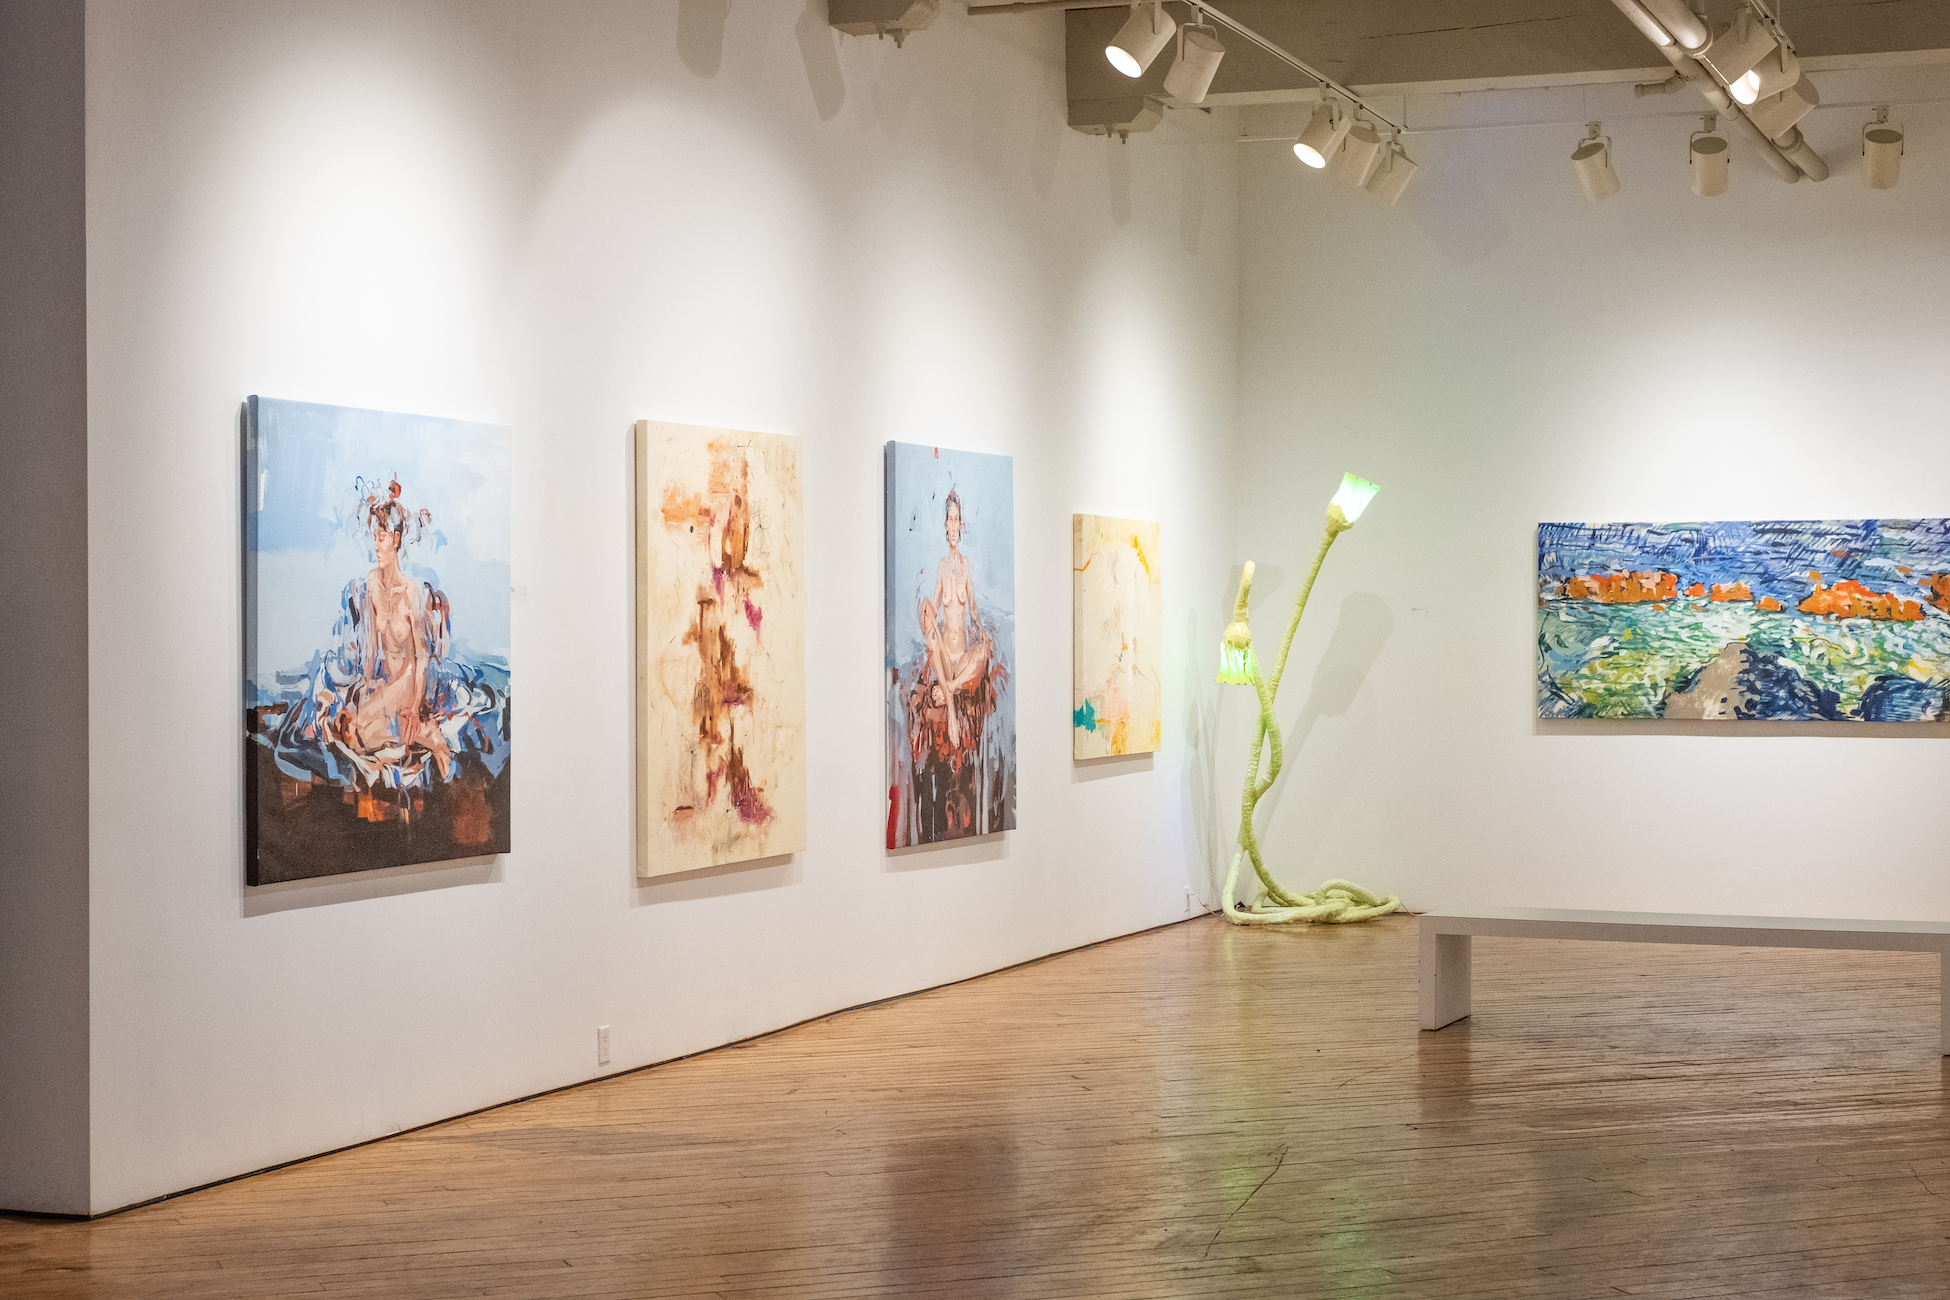 The recent Group Exhibition Wavelengths featured work by Lola Erhart, Delfina Gómez Marestaing, Celia Lees, Fabiana Salomao, Steven K. Tucker, and David Wilstermann